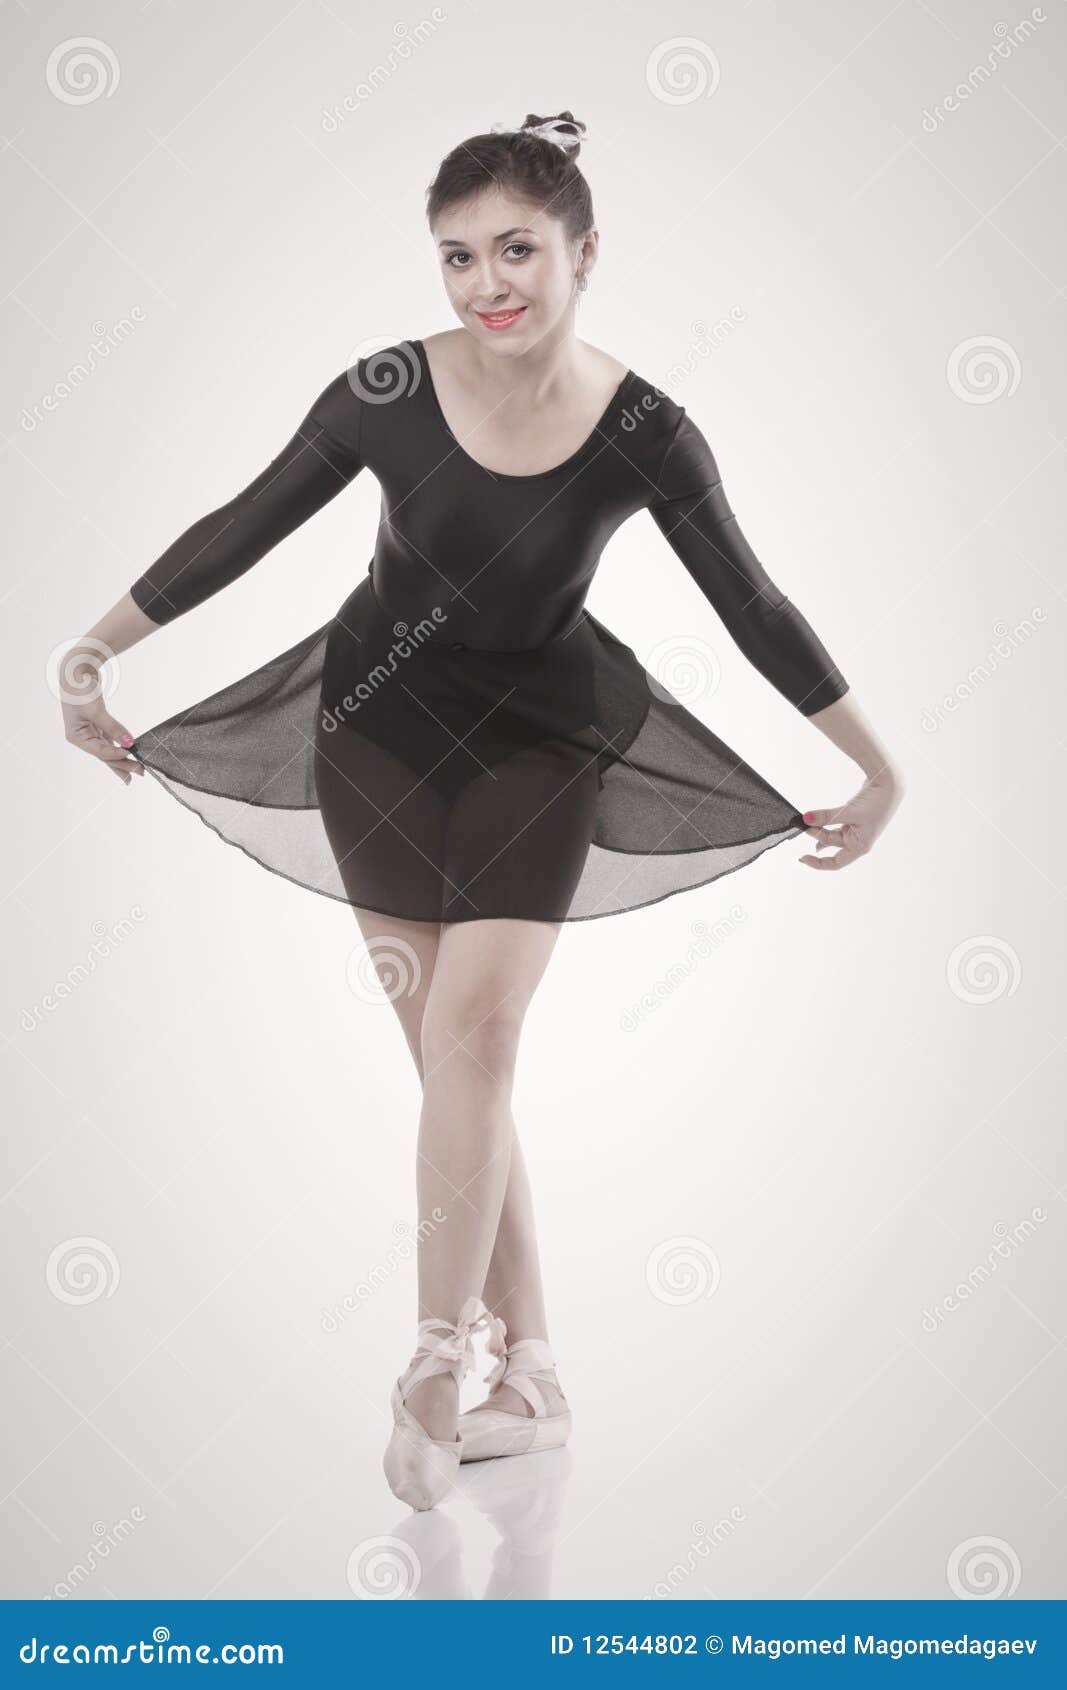 804 Ballerina Bow Photos Free & Royalty-Free Stock Dreamstime